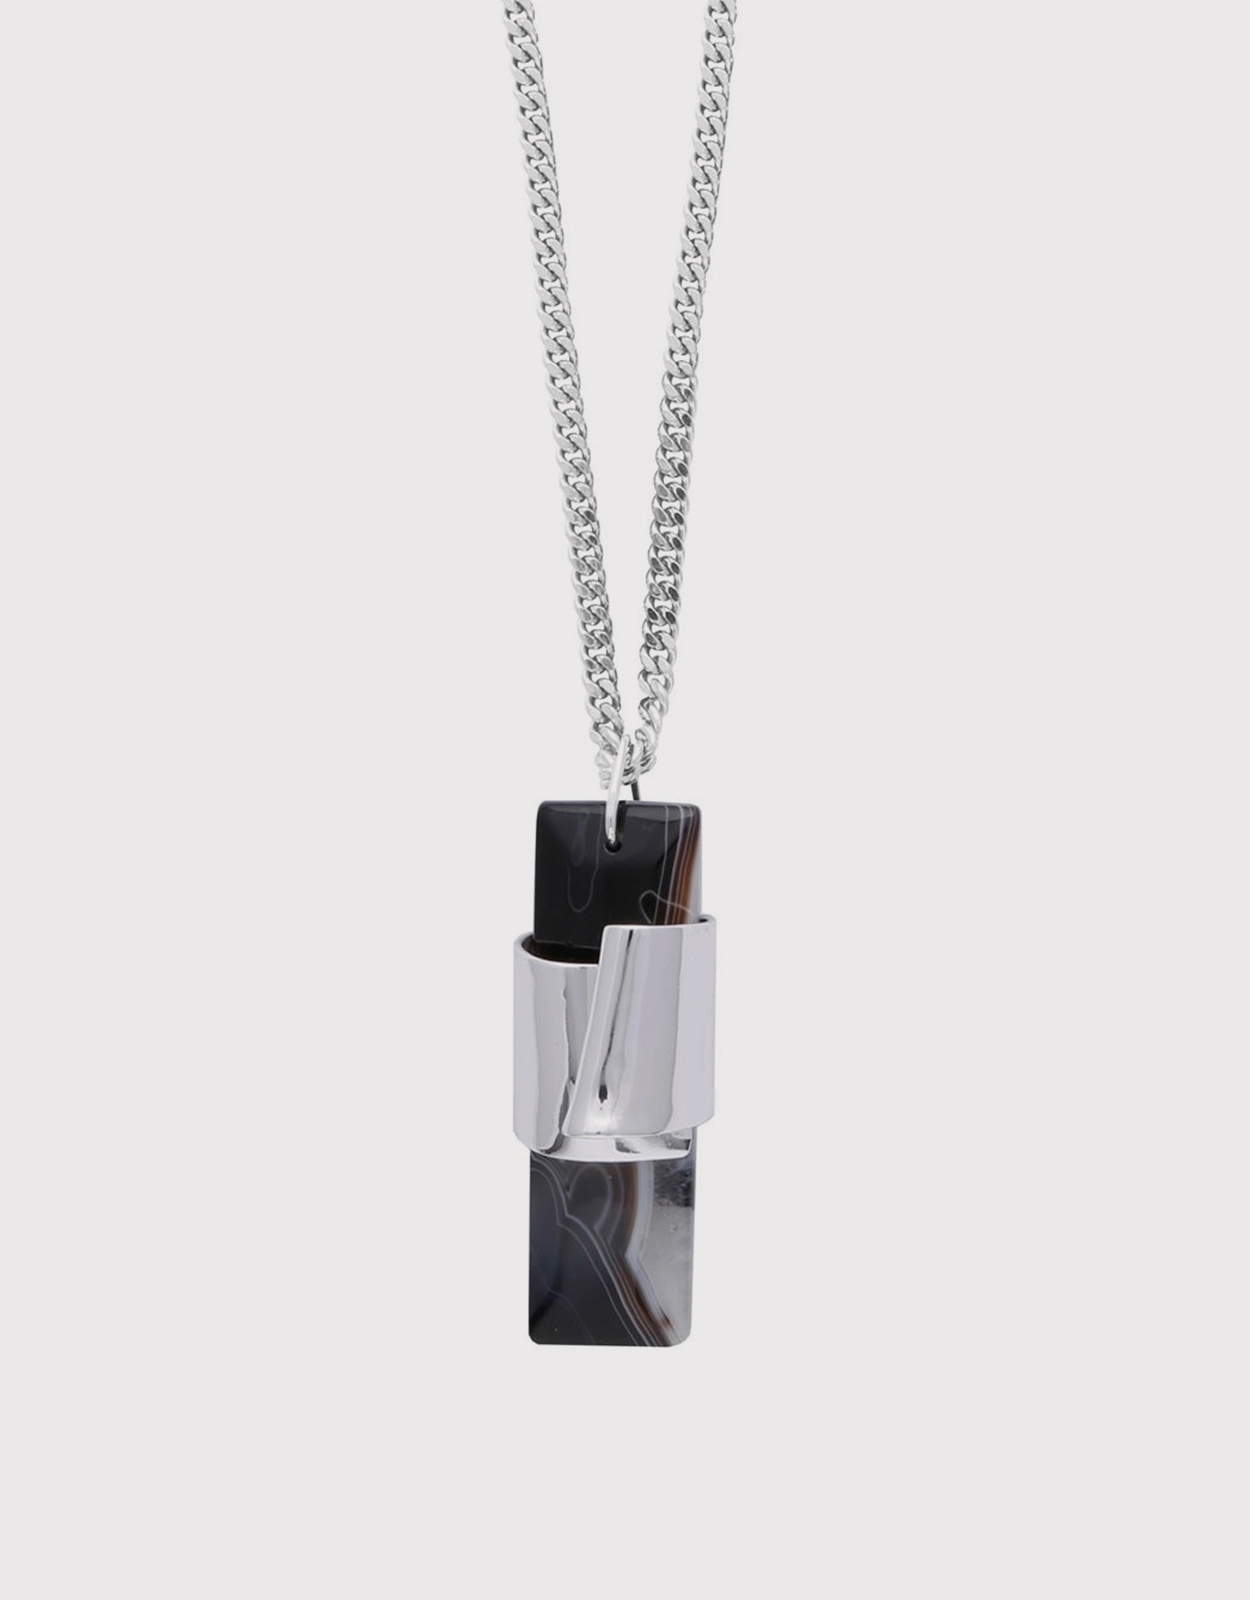 Zippo necklace - next level fashion : r/Zippo